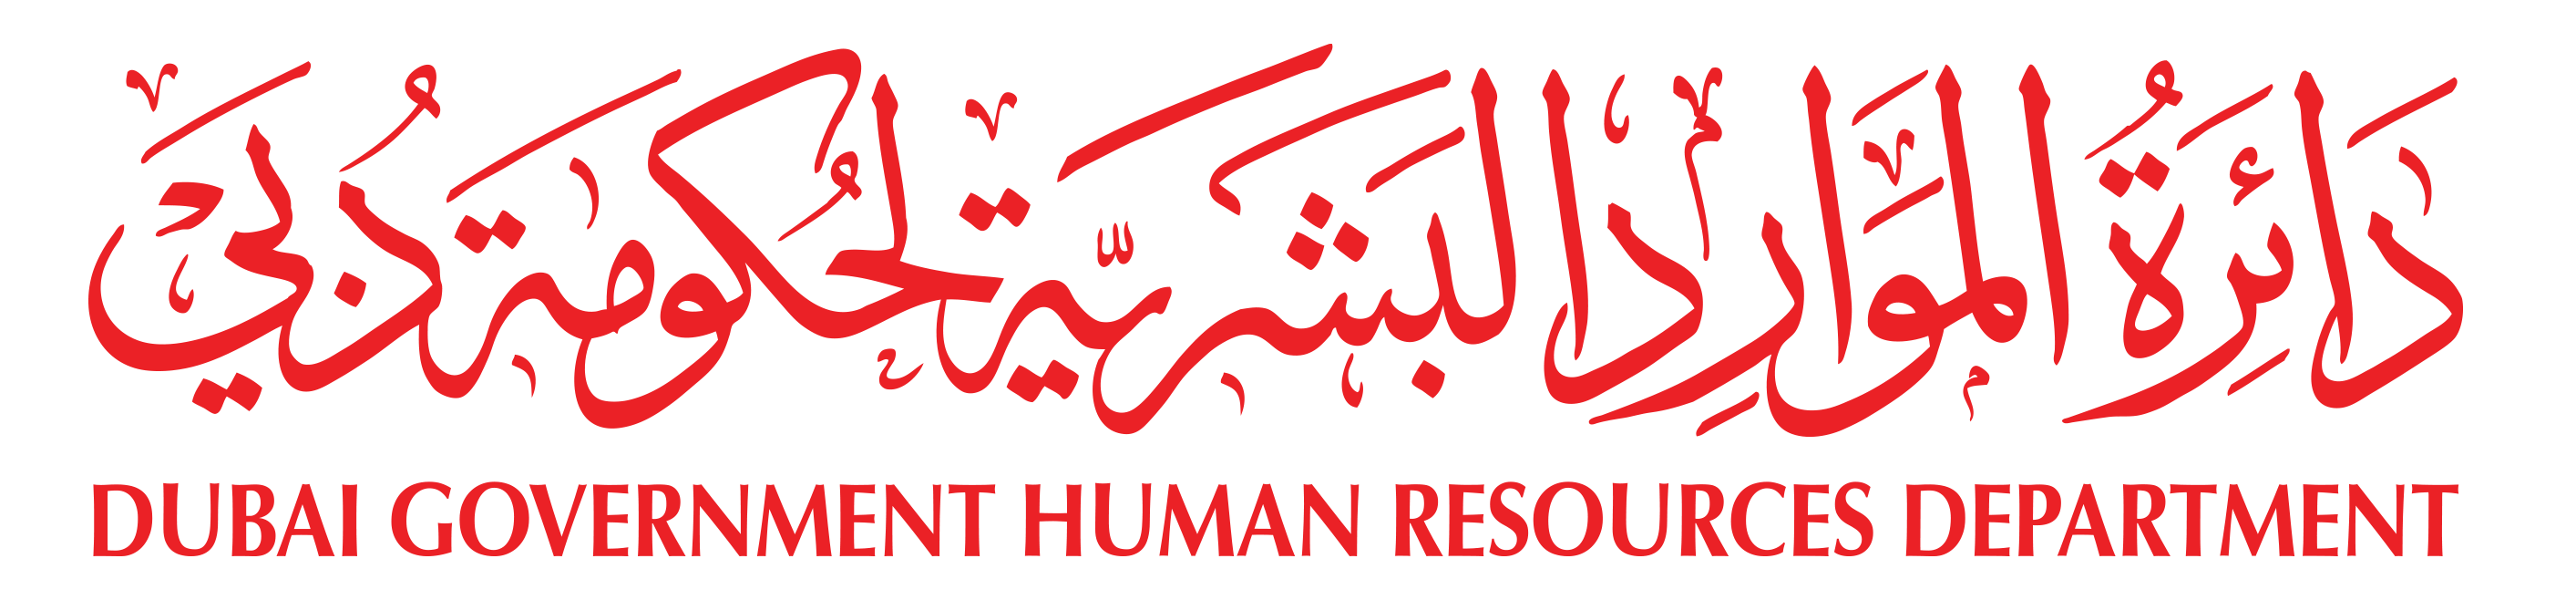 Dubai Government Human Resources